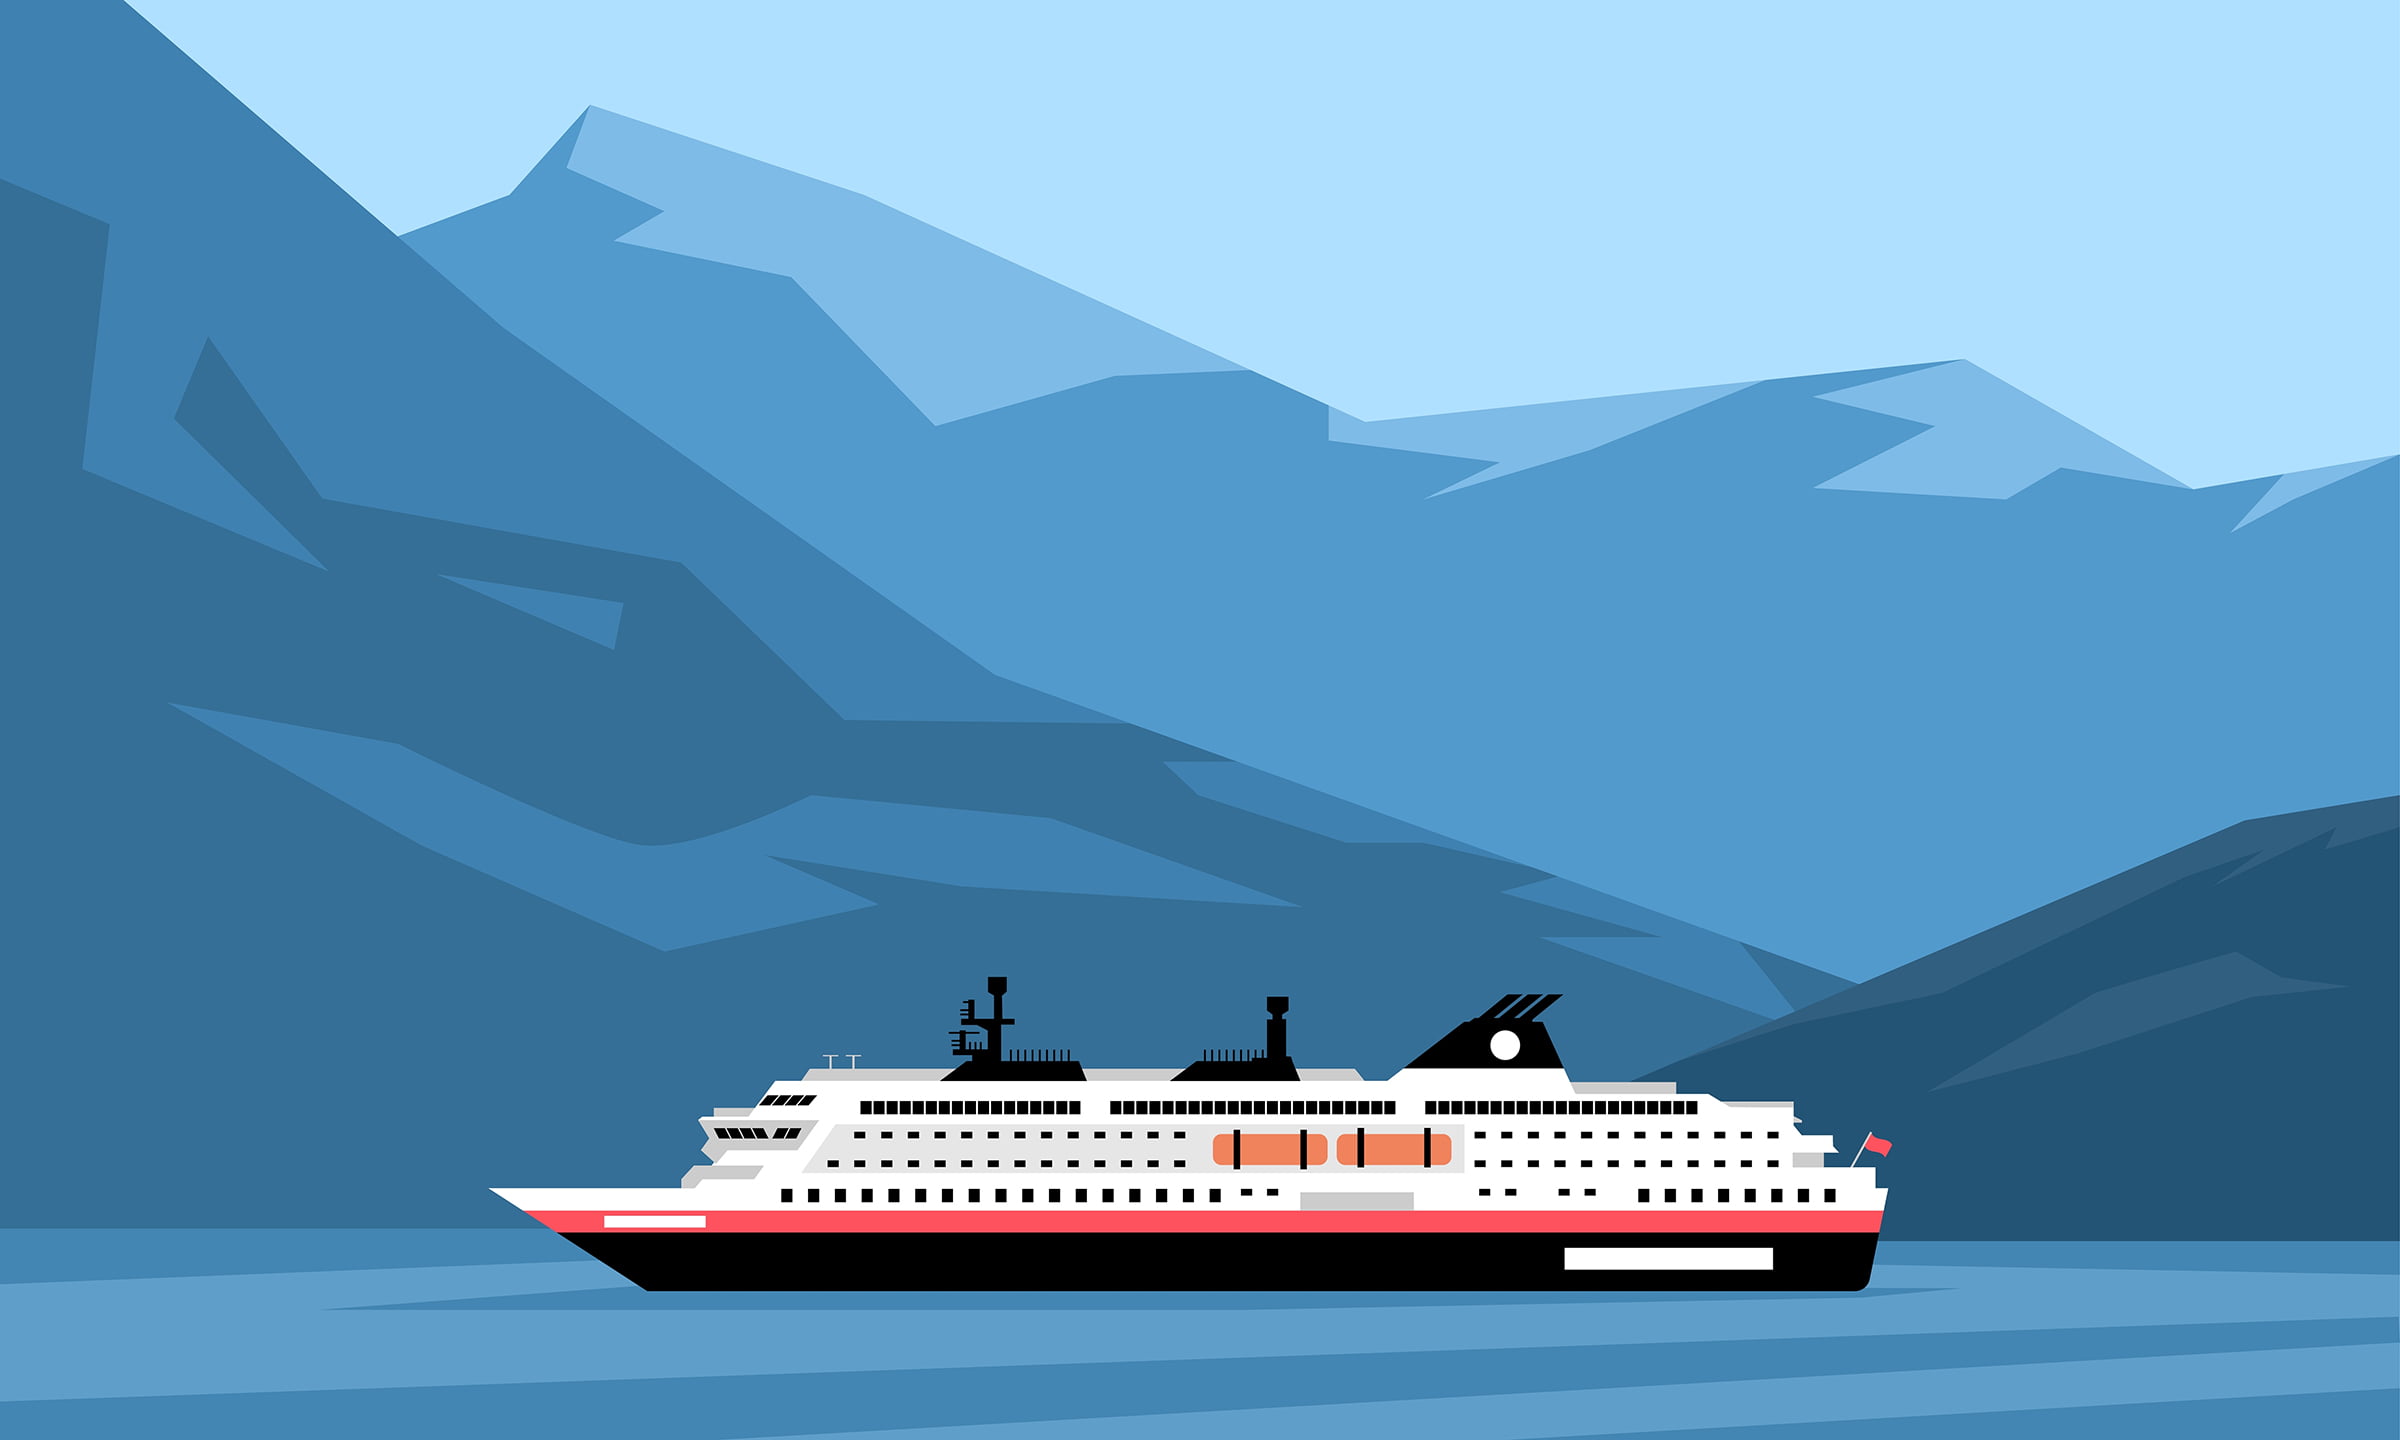 Hurtigruten ferry in Norway illustration.